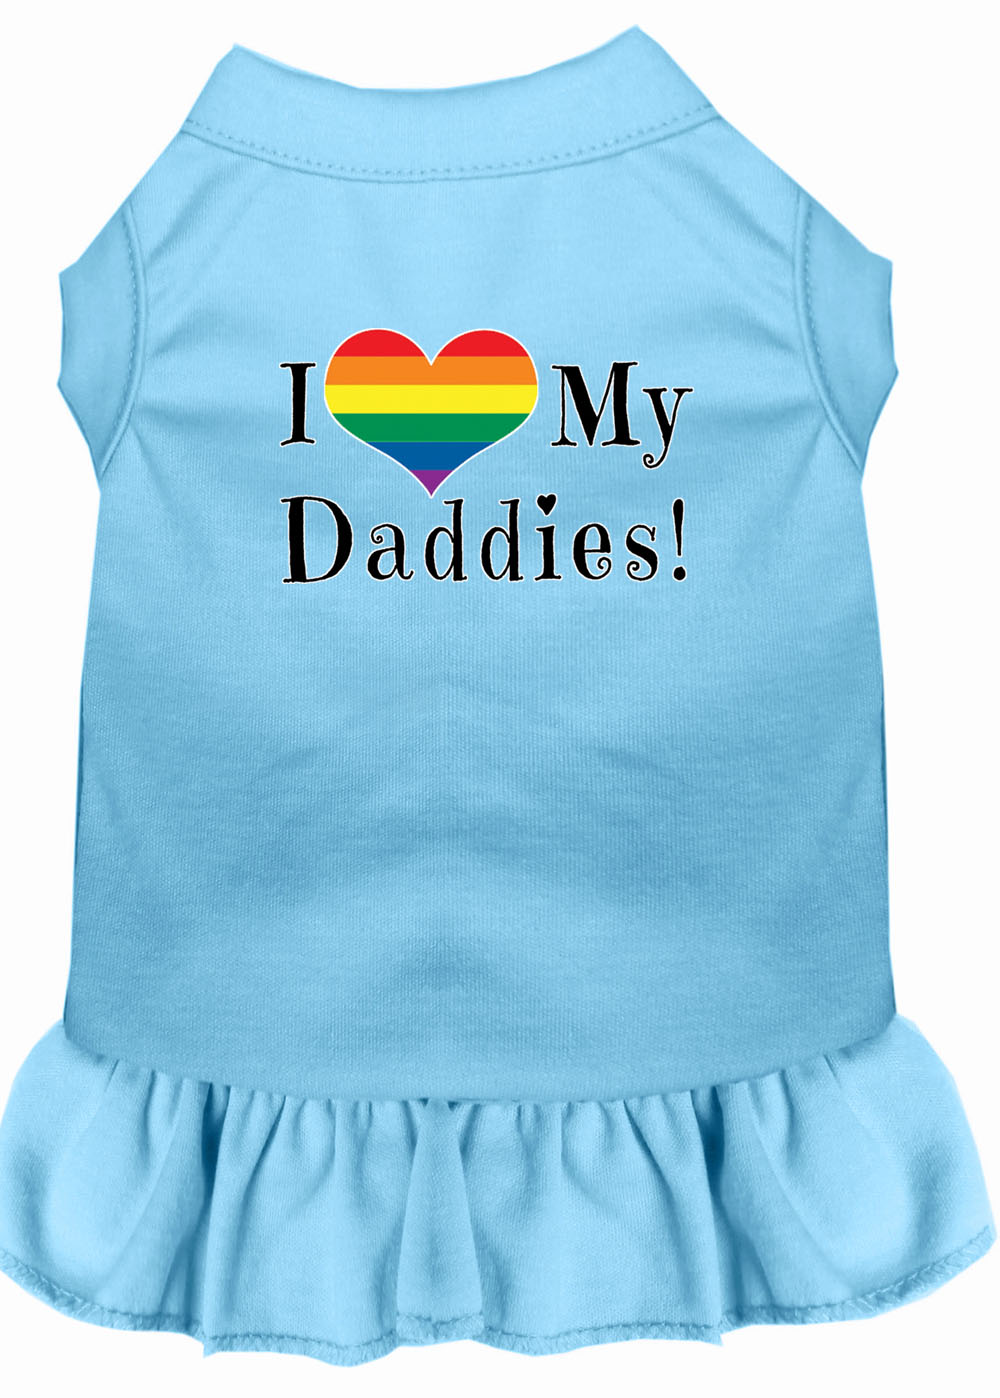 I Heart my Daddies Screen Print Dog Dress Baby Blue XL